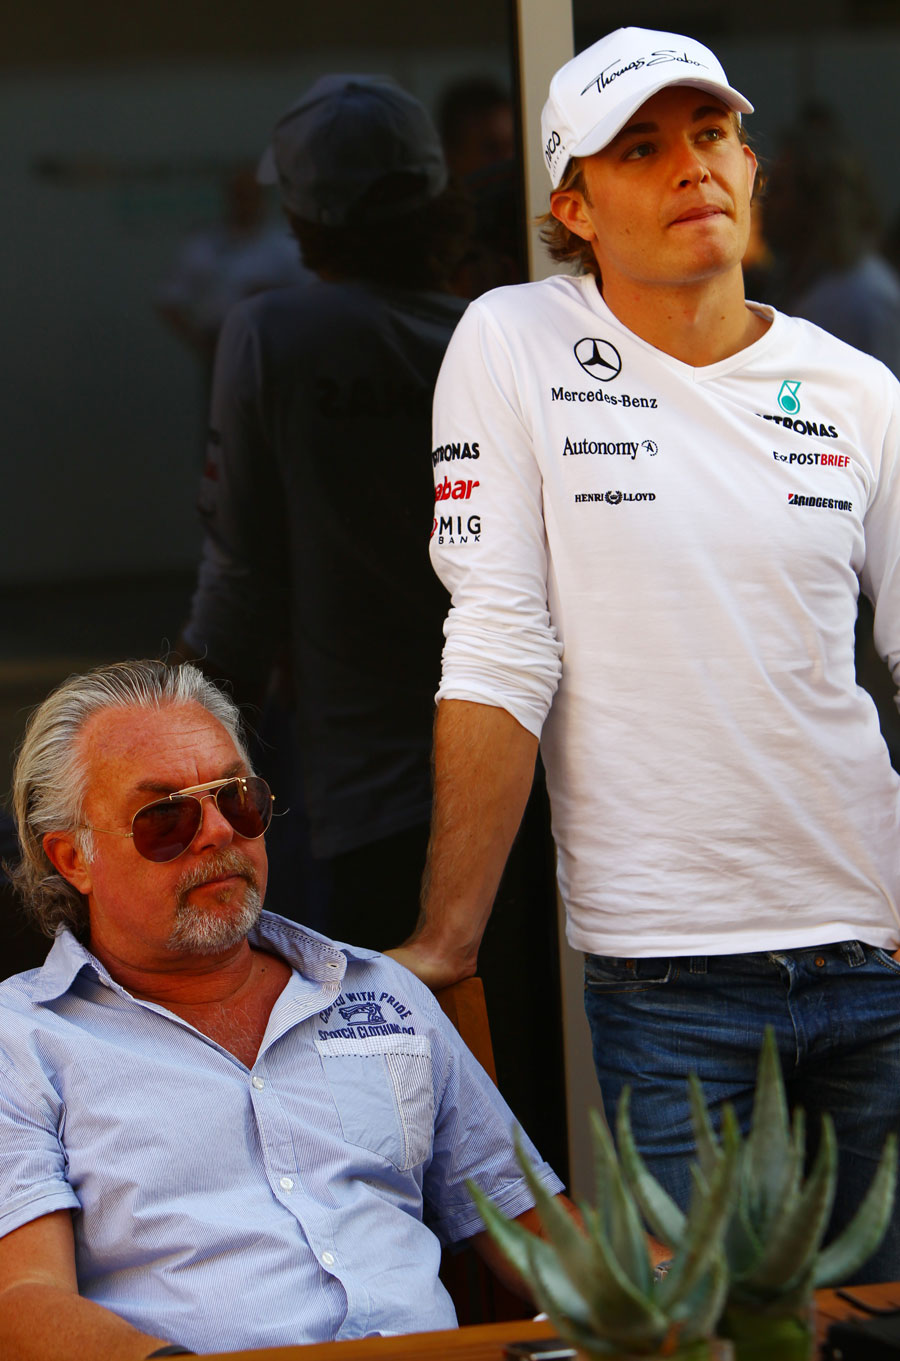 Keke and Nico Rosberg in the paddock